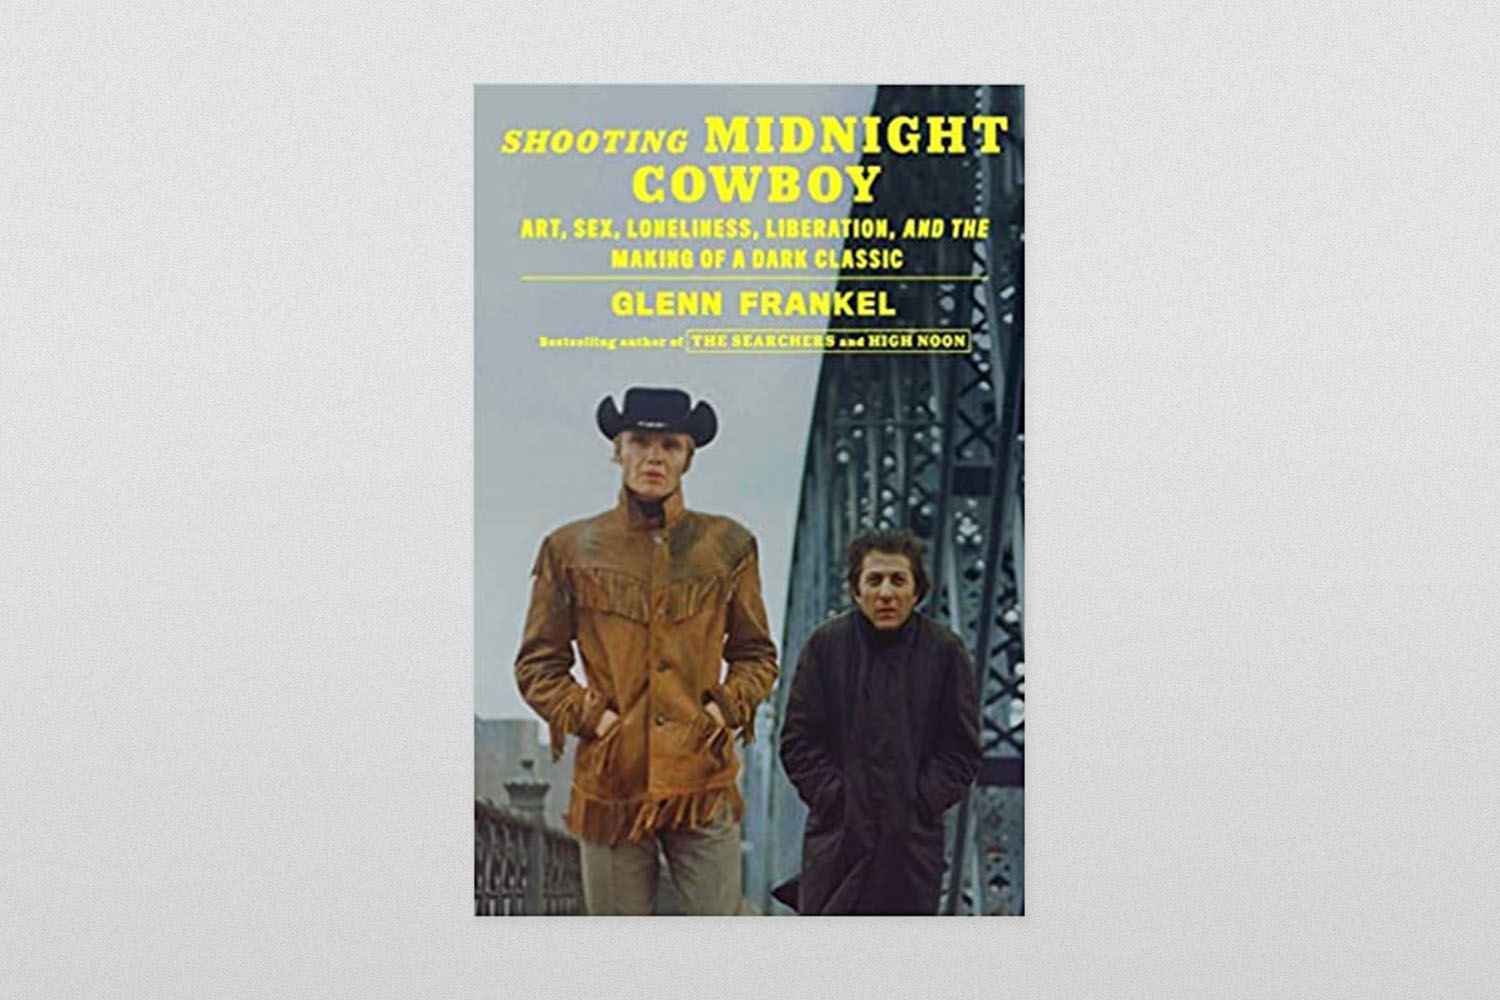 "Shooting Midnight Cowboy"